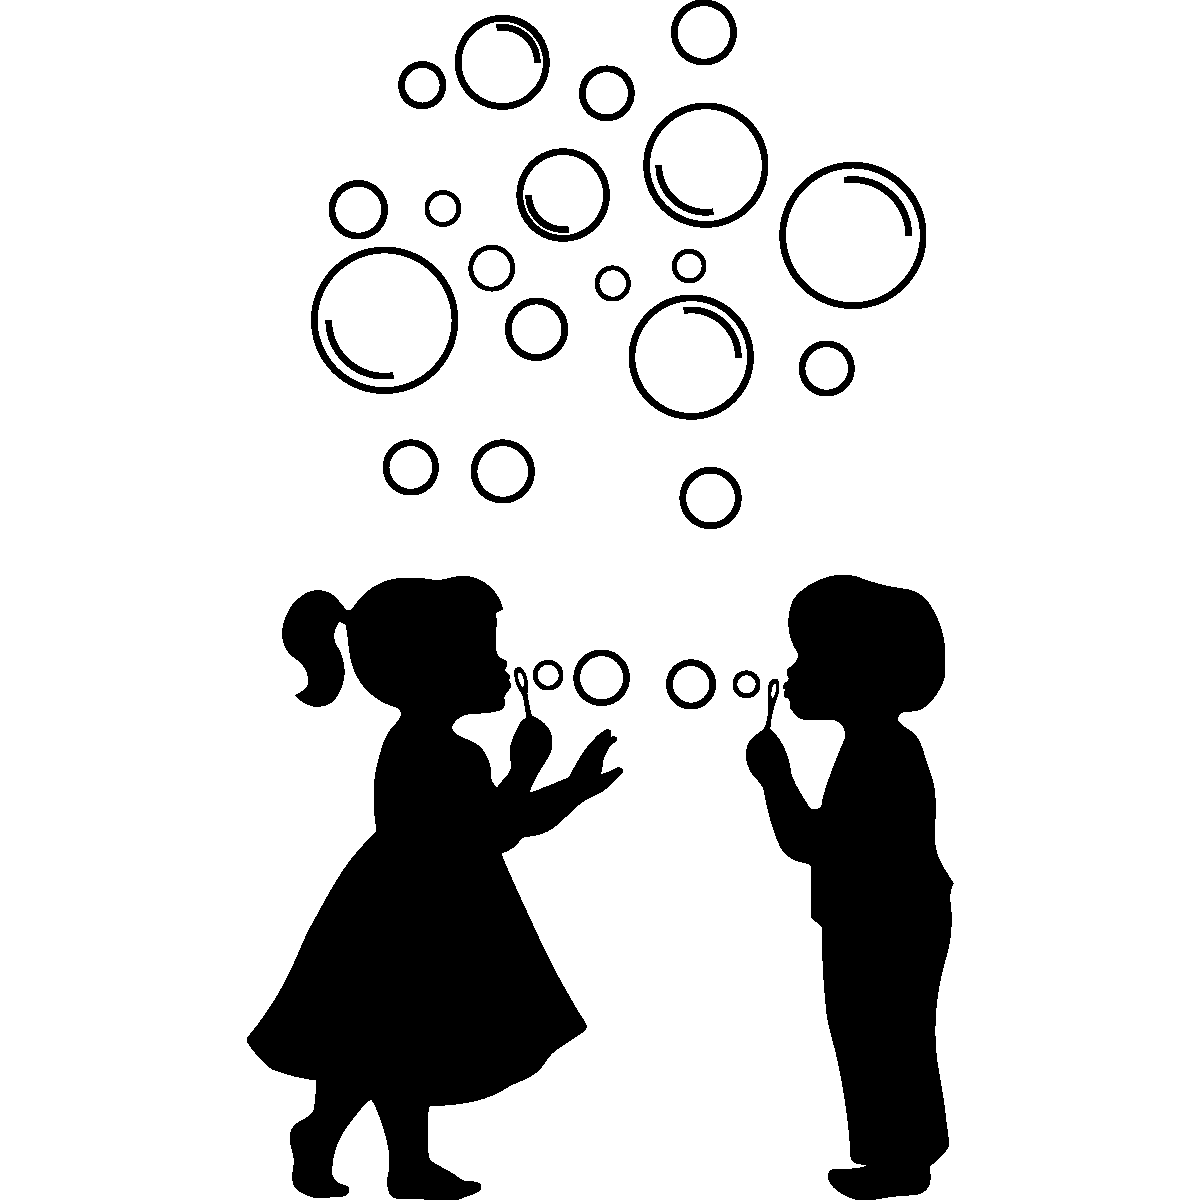 Ballon Bulle Girl or Boy Baby Shower Transparent 